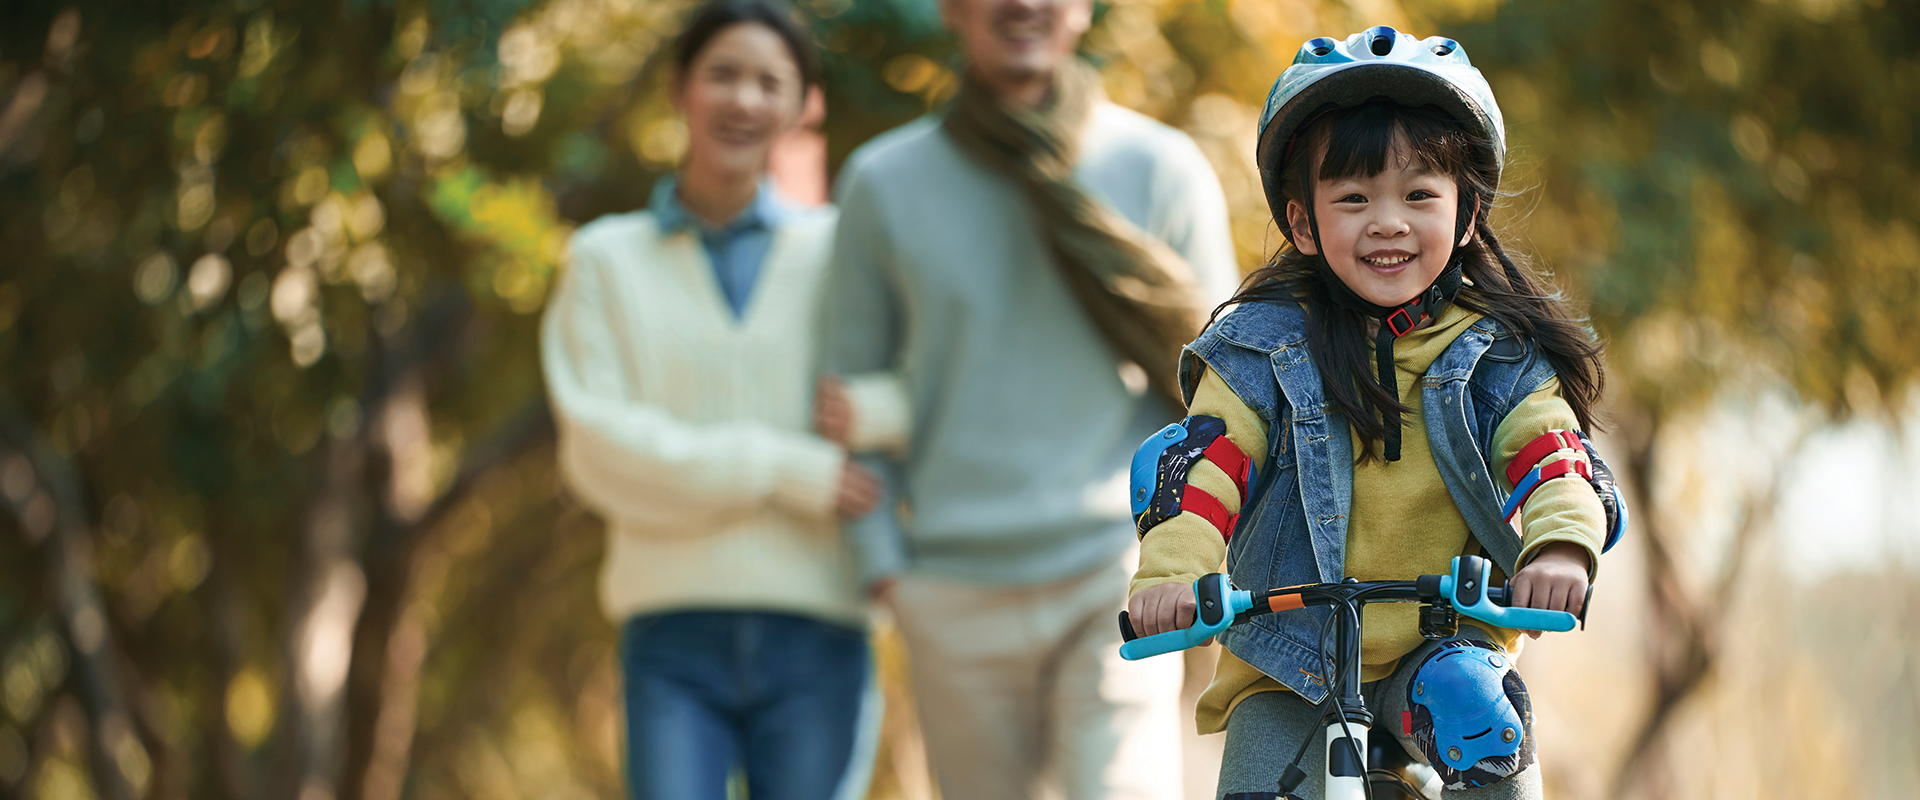 girl-riding-bike-family-image